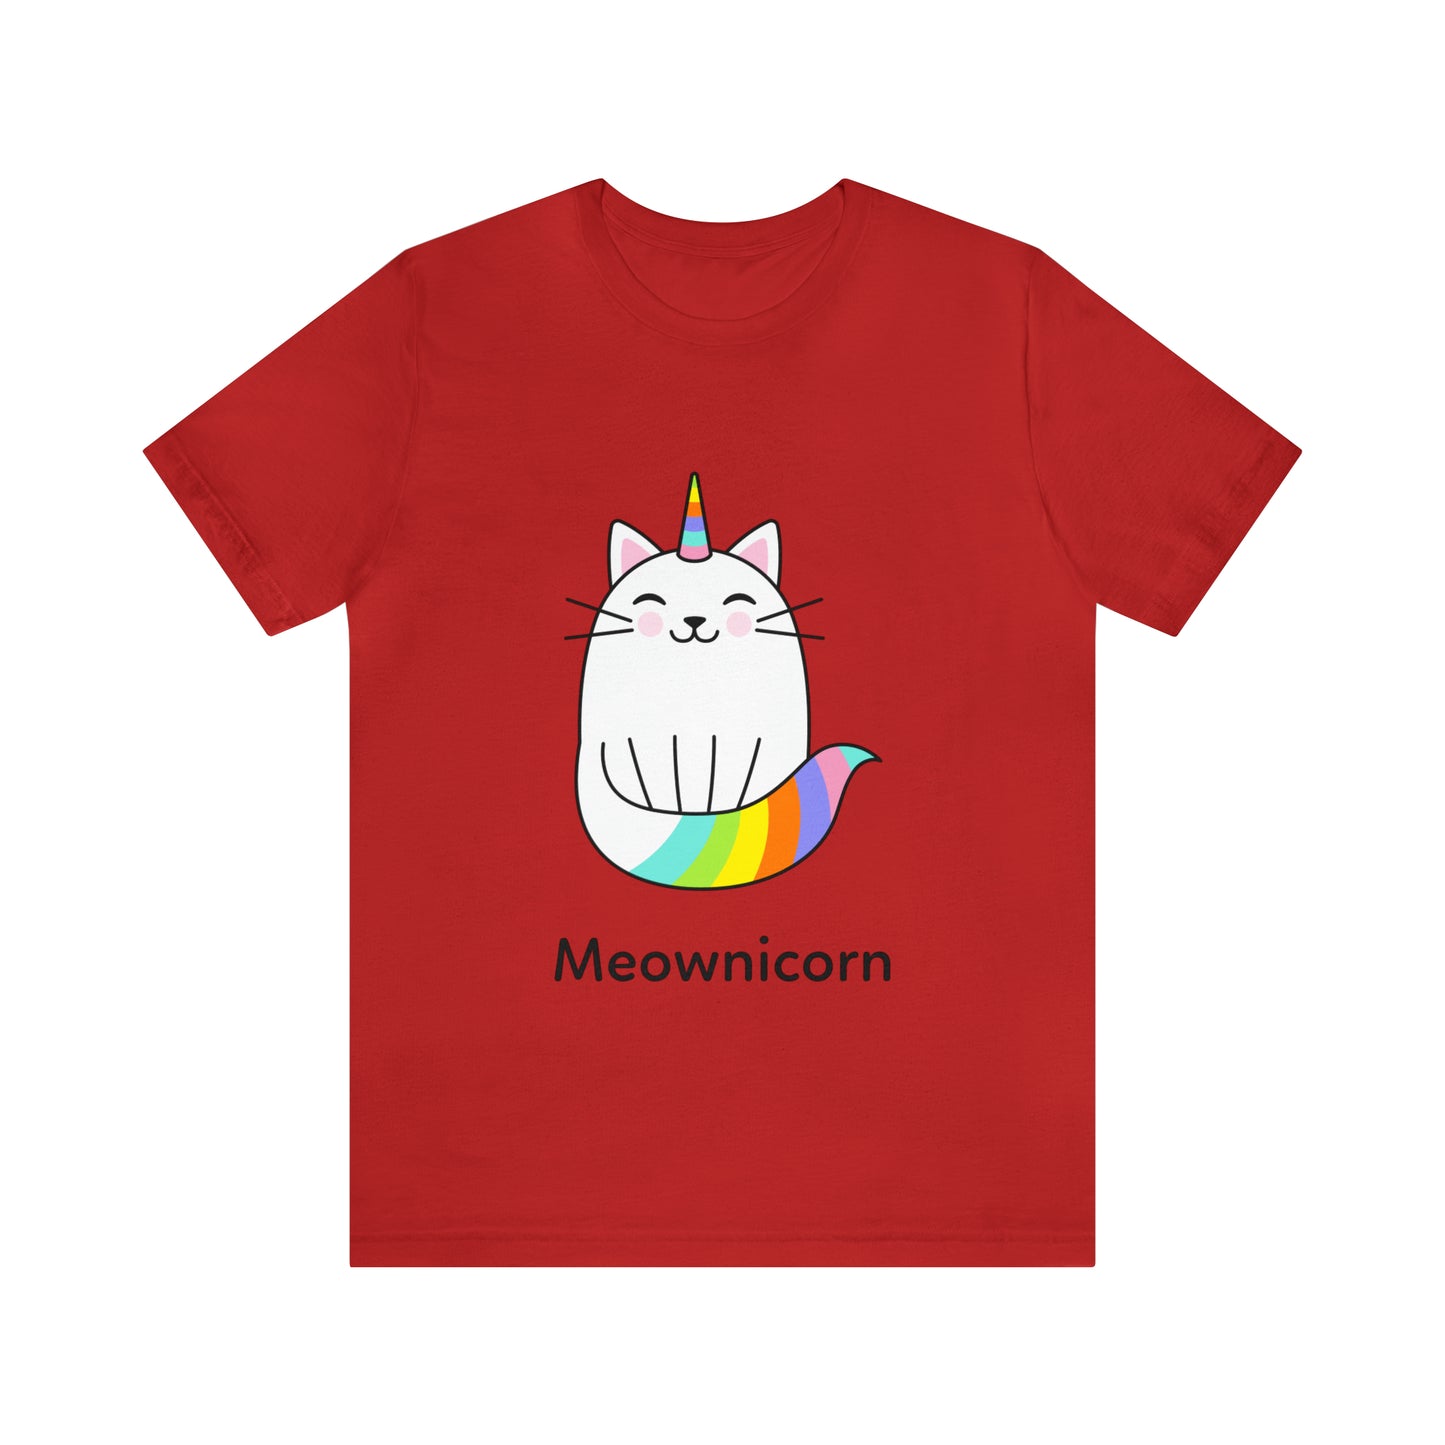 Meownicorn - Unisex T-Shirt